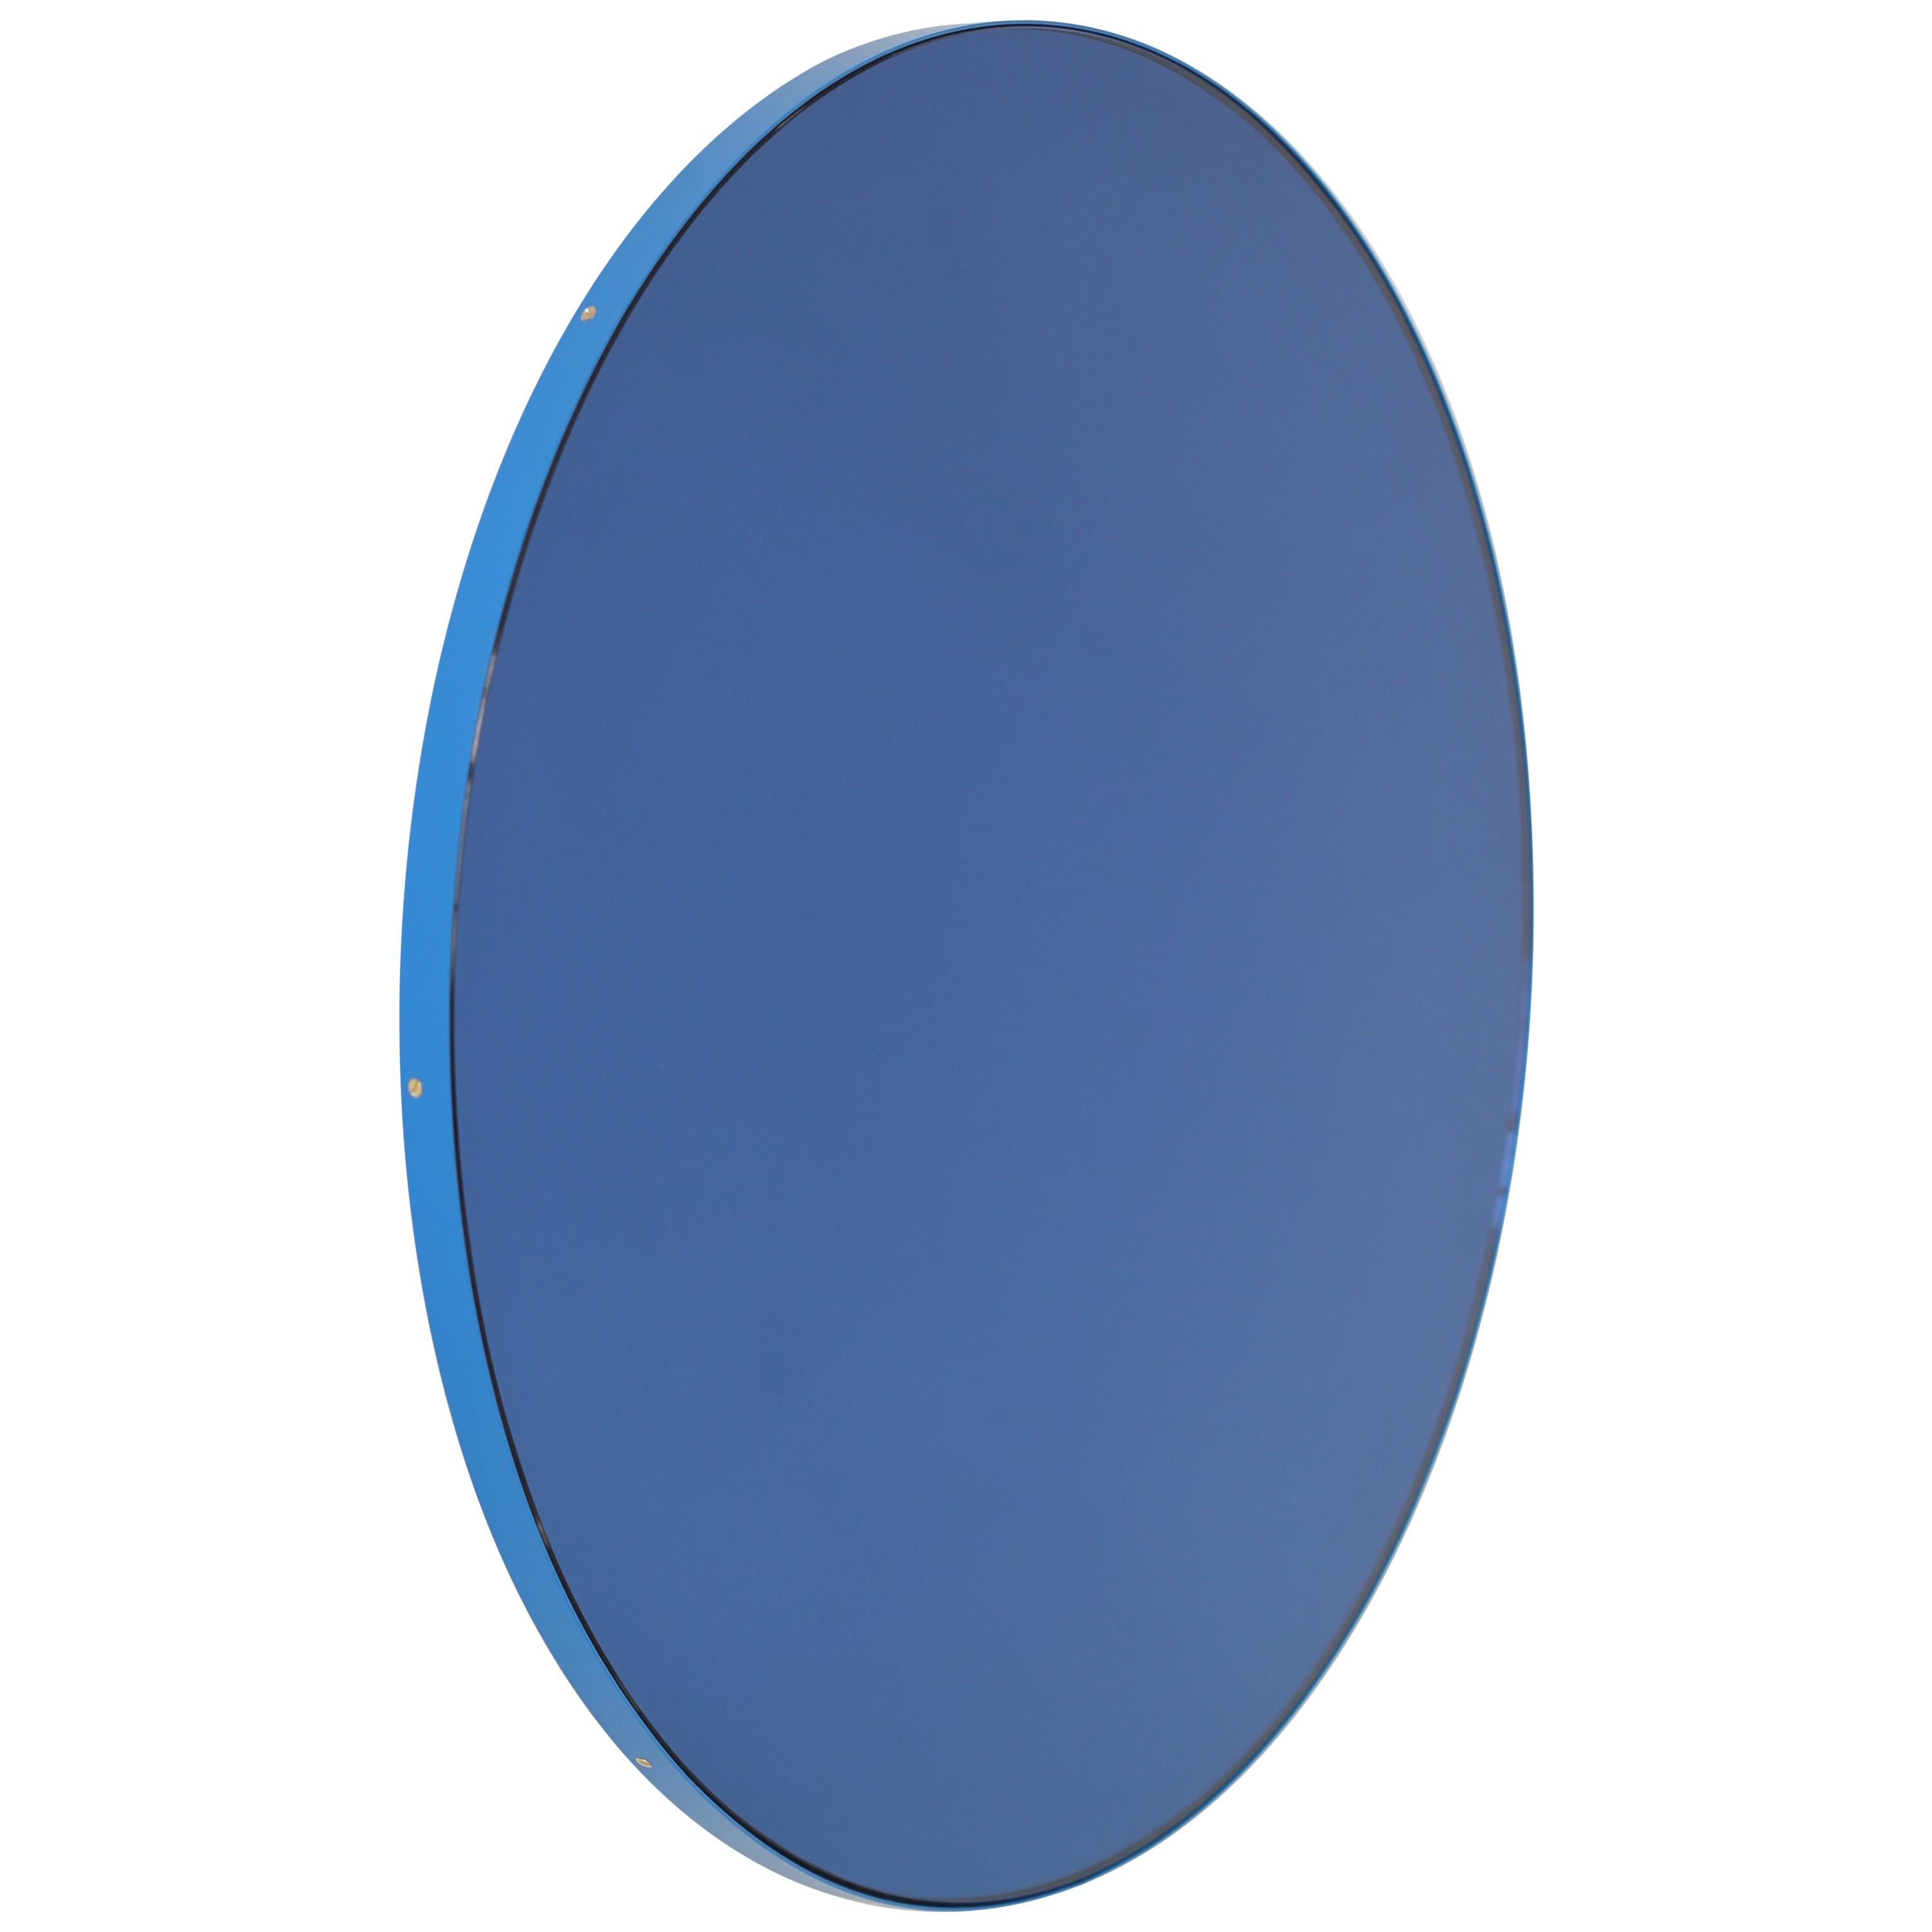 Miroir circulaire Orbis teinté bleu avec un cadre bleu contemporain, sur mesure, XL